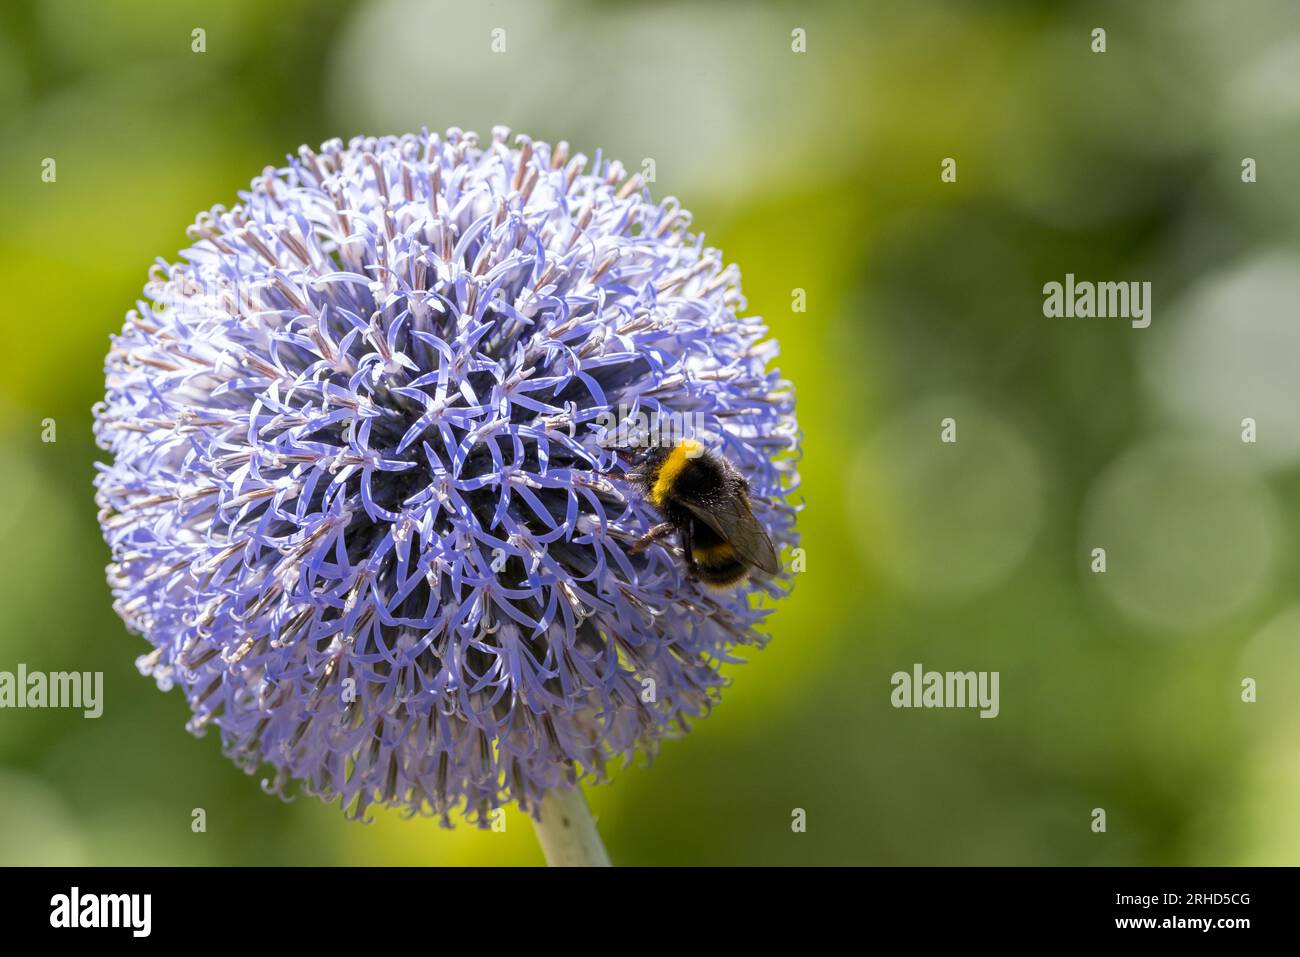 Bumble bee on Alium flower Stock Photo